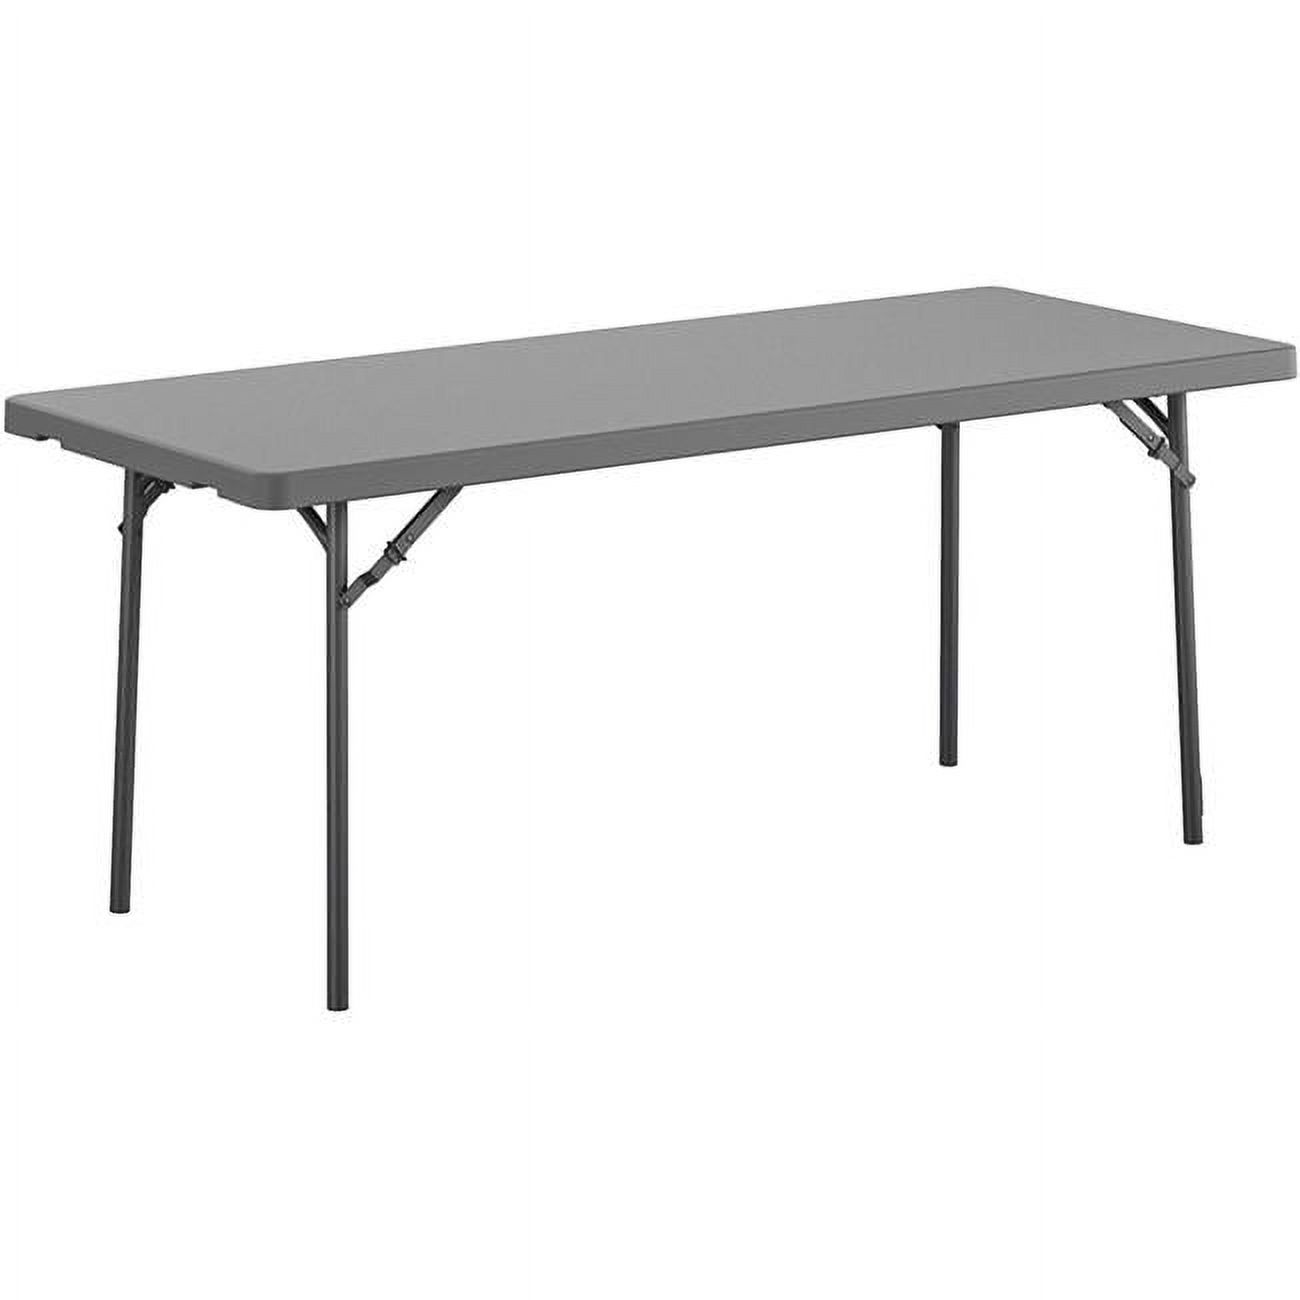 Dorel Zown Corner Blow Mold Large Folding Table - image 1 of 11